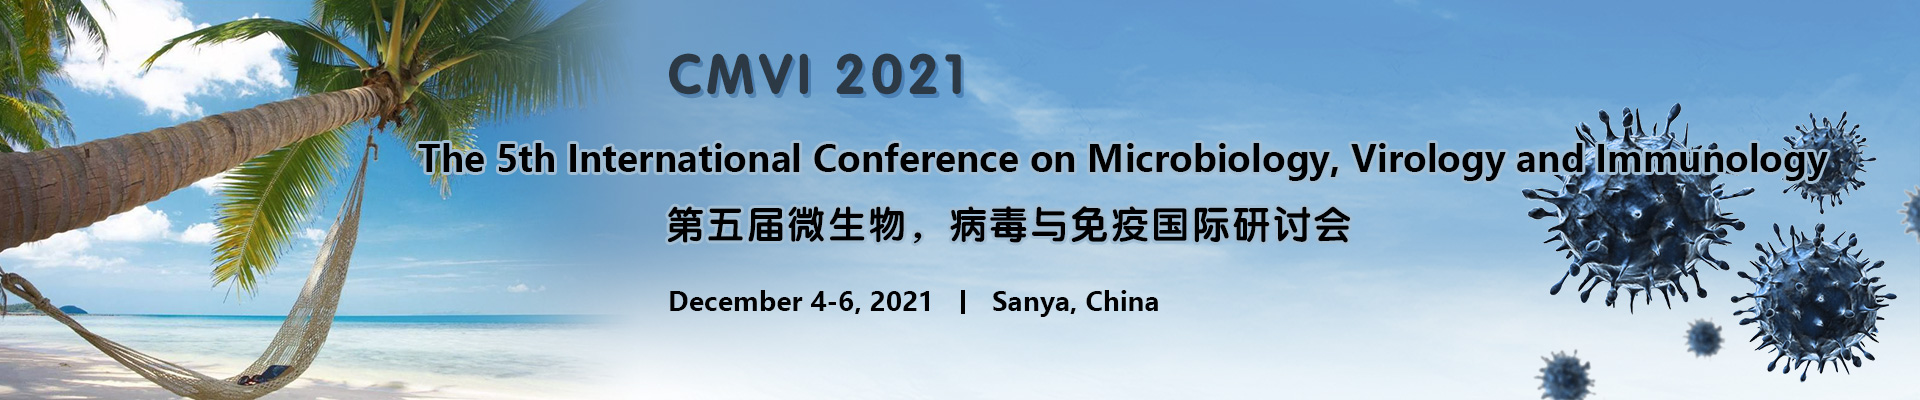 The 5th International Conference on Microbiology, Virology and Immunology (CMVI 2021), Sanya, Hainan, China